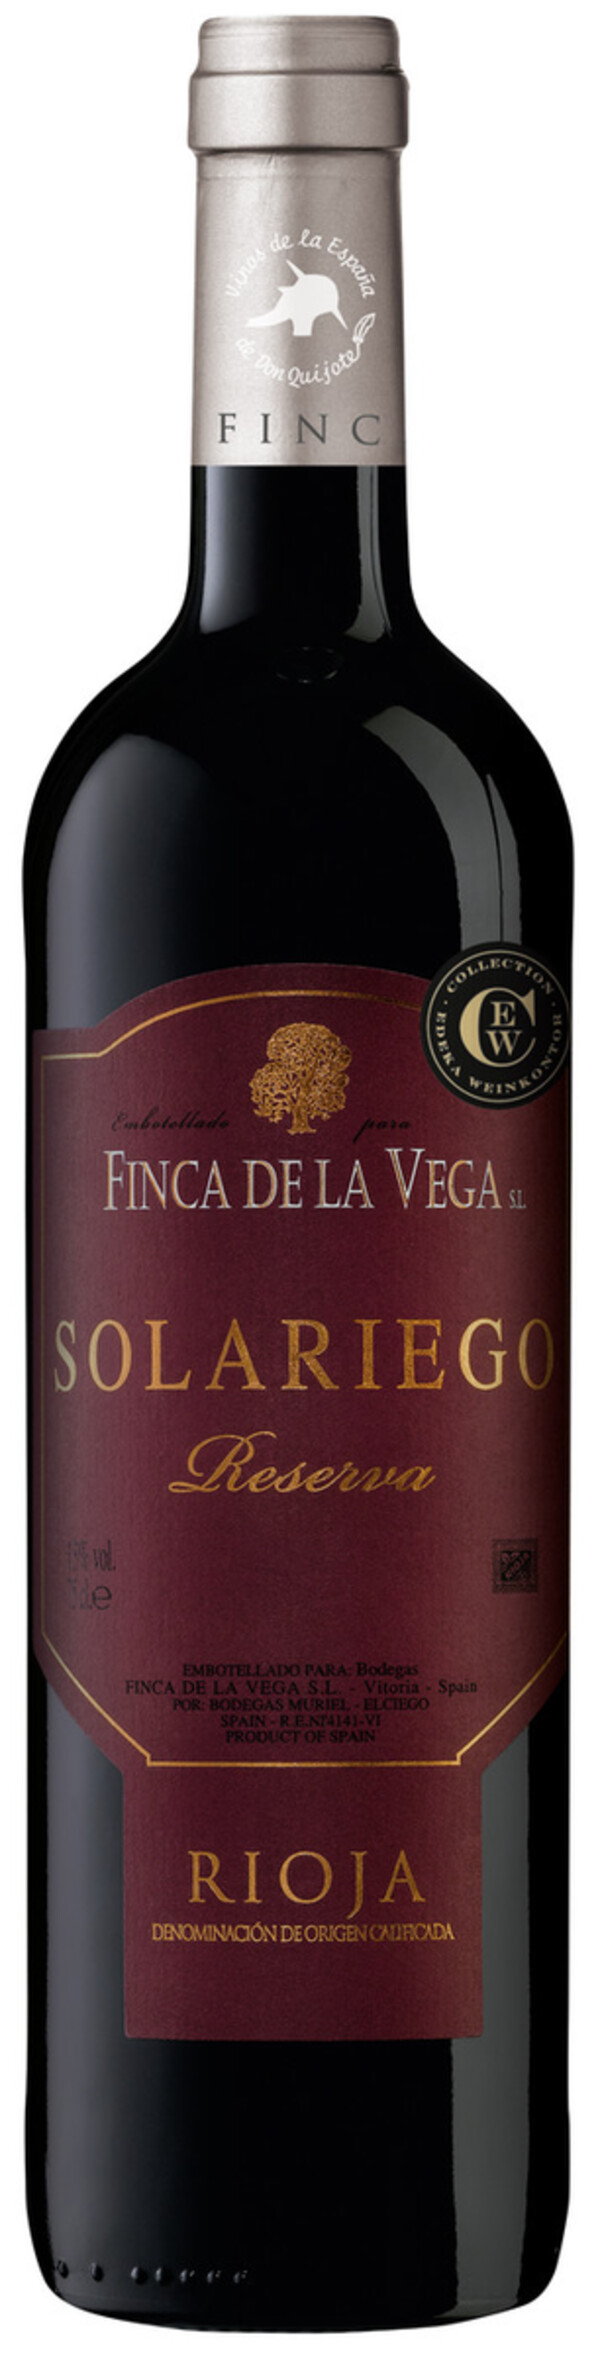 Bild 1 von Finca de la Vega Rioja Reserva 2014 0,75 ltr